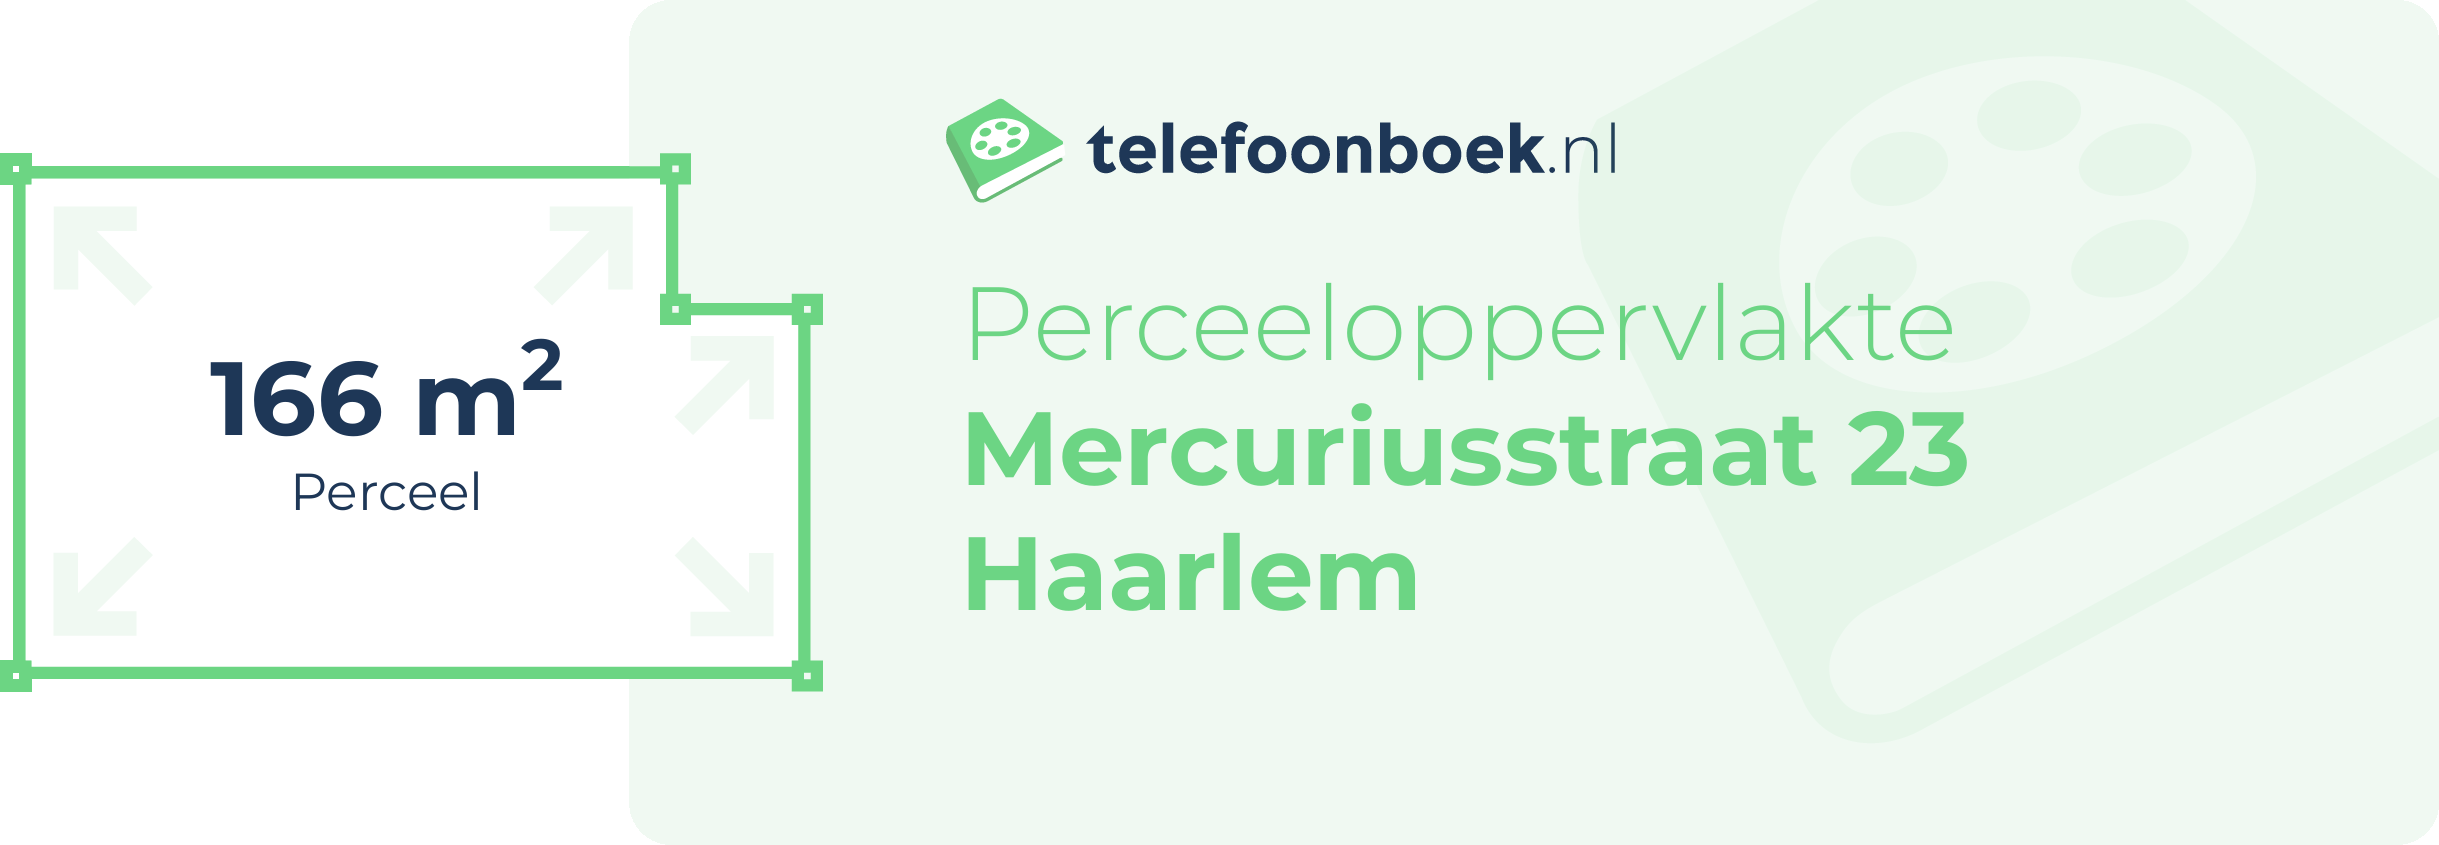 Perceeloppervlakte Mercuriusstraat 23 Haarlem